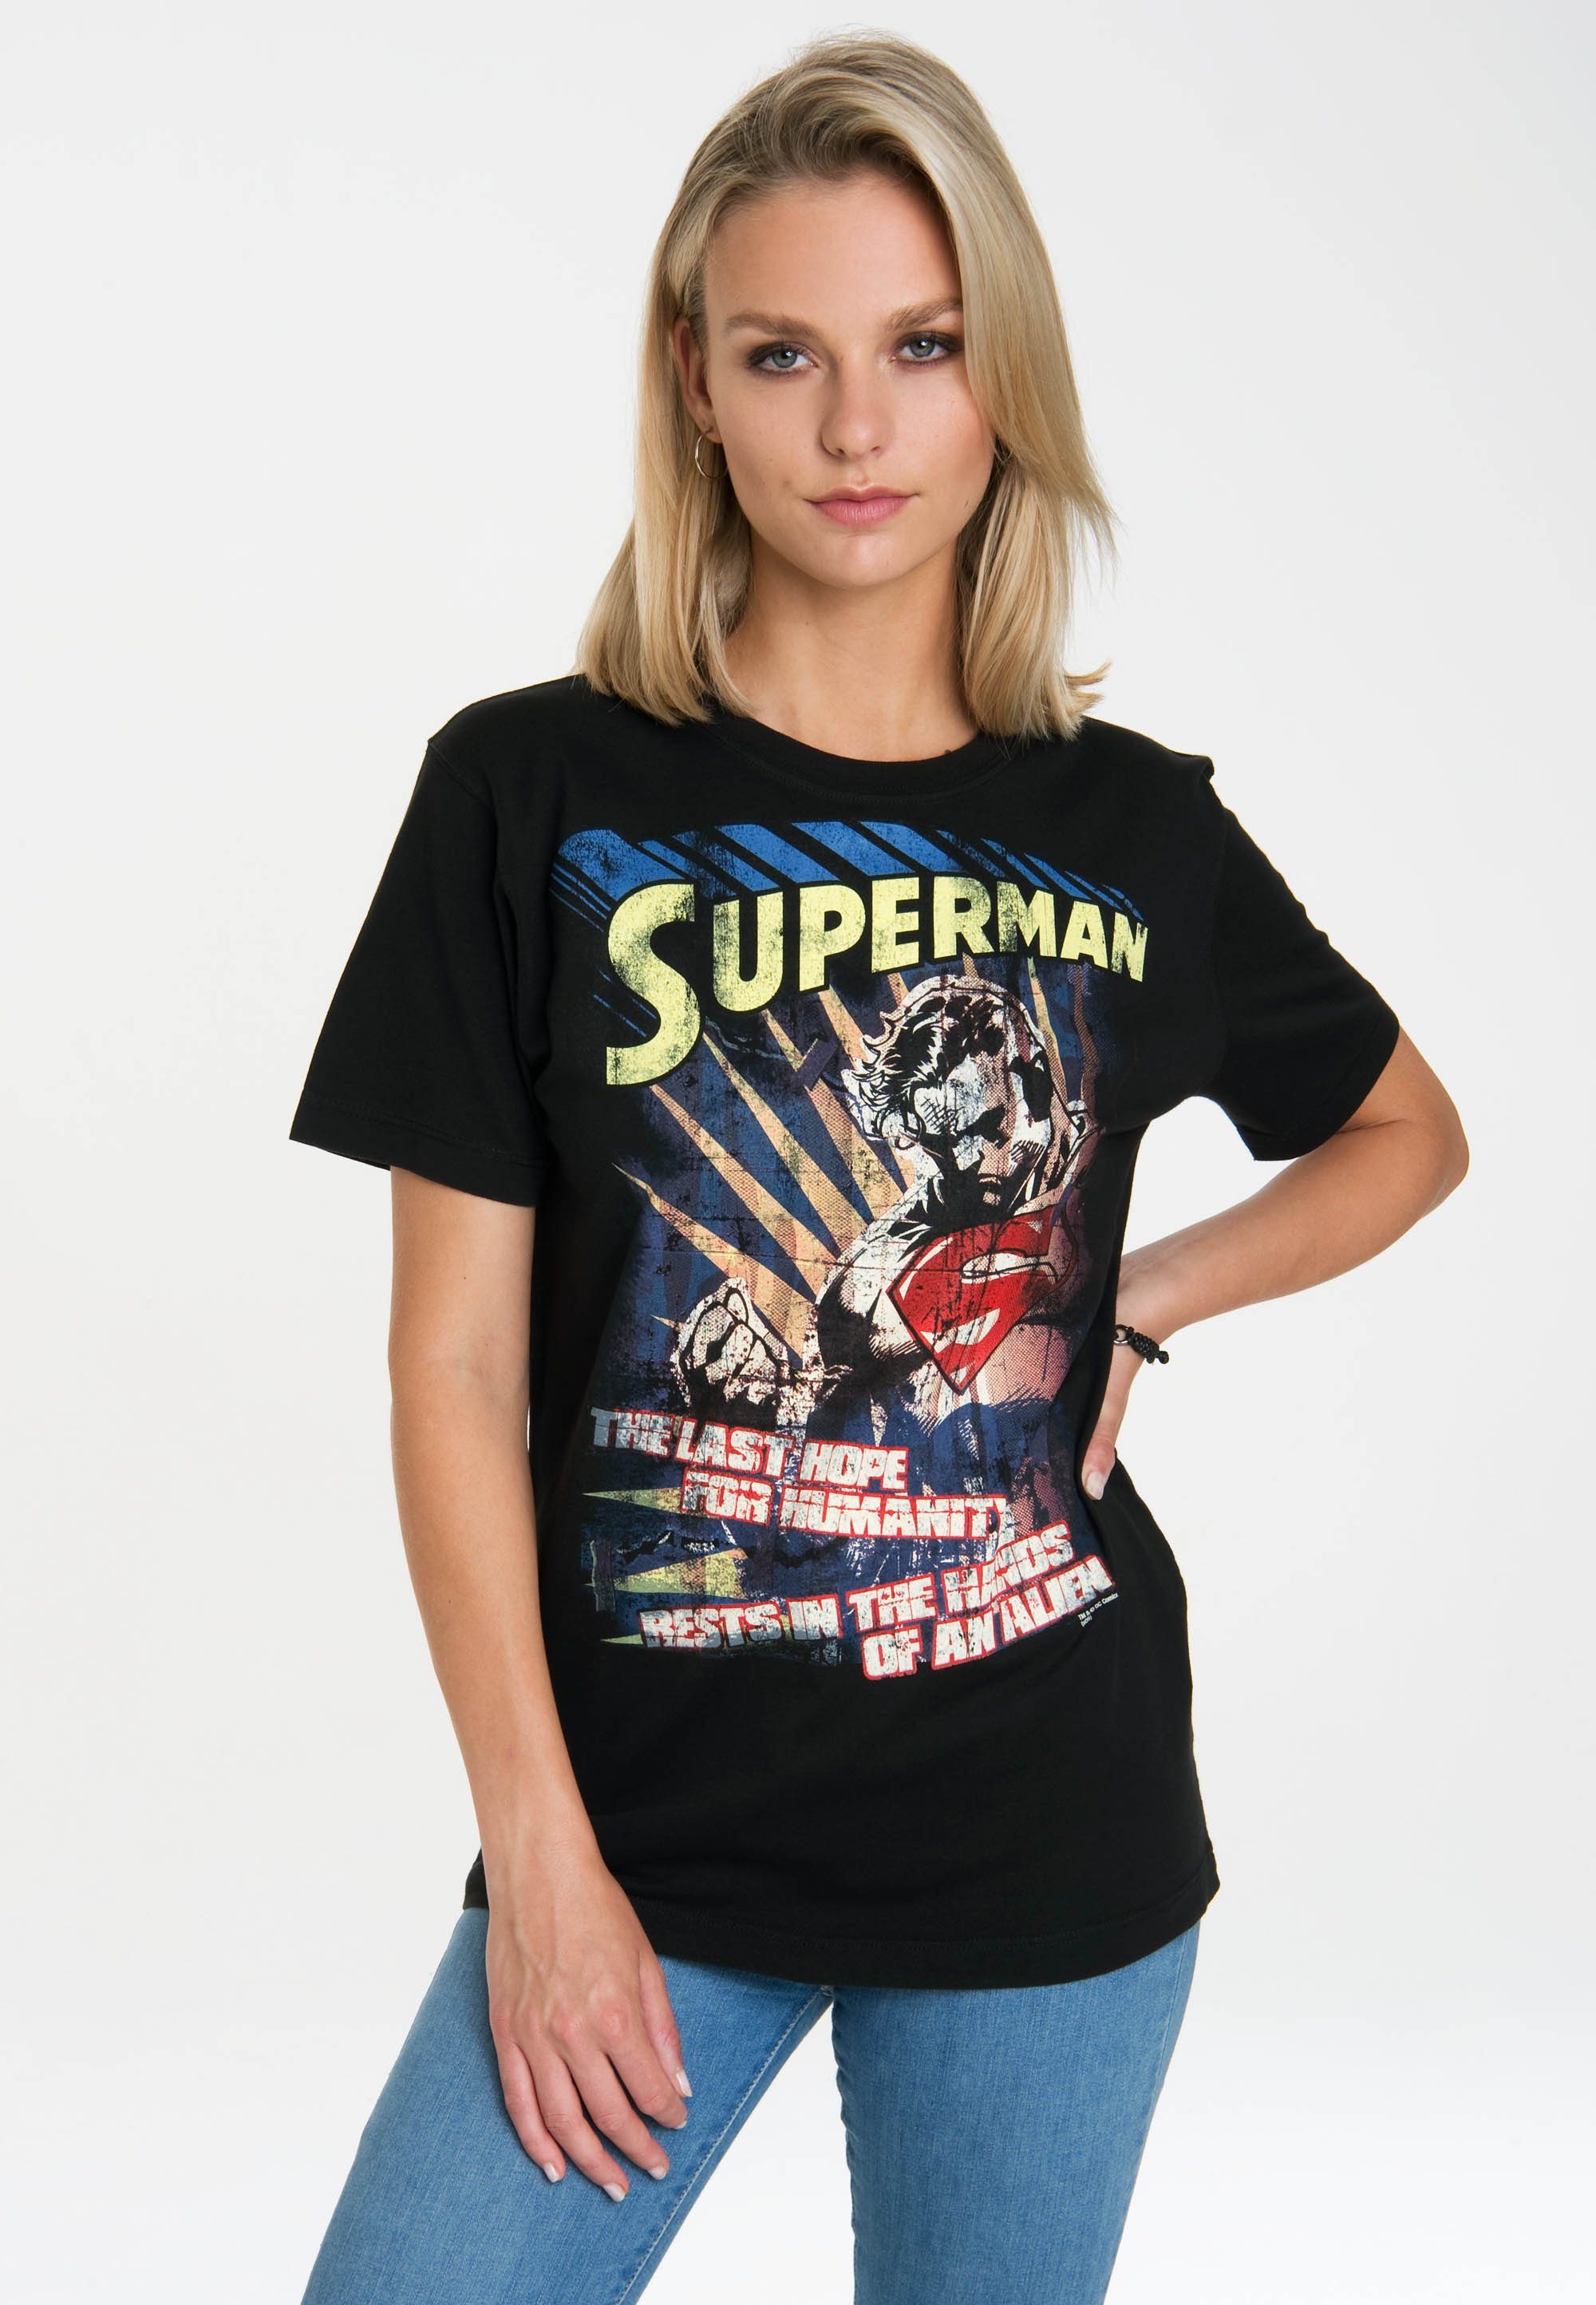 LOGOSHIRT T-Shirt Superman - The Last Hope mit lizenziertem Originaldesign | T-Shirts